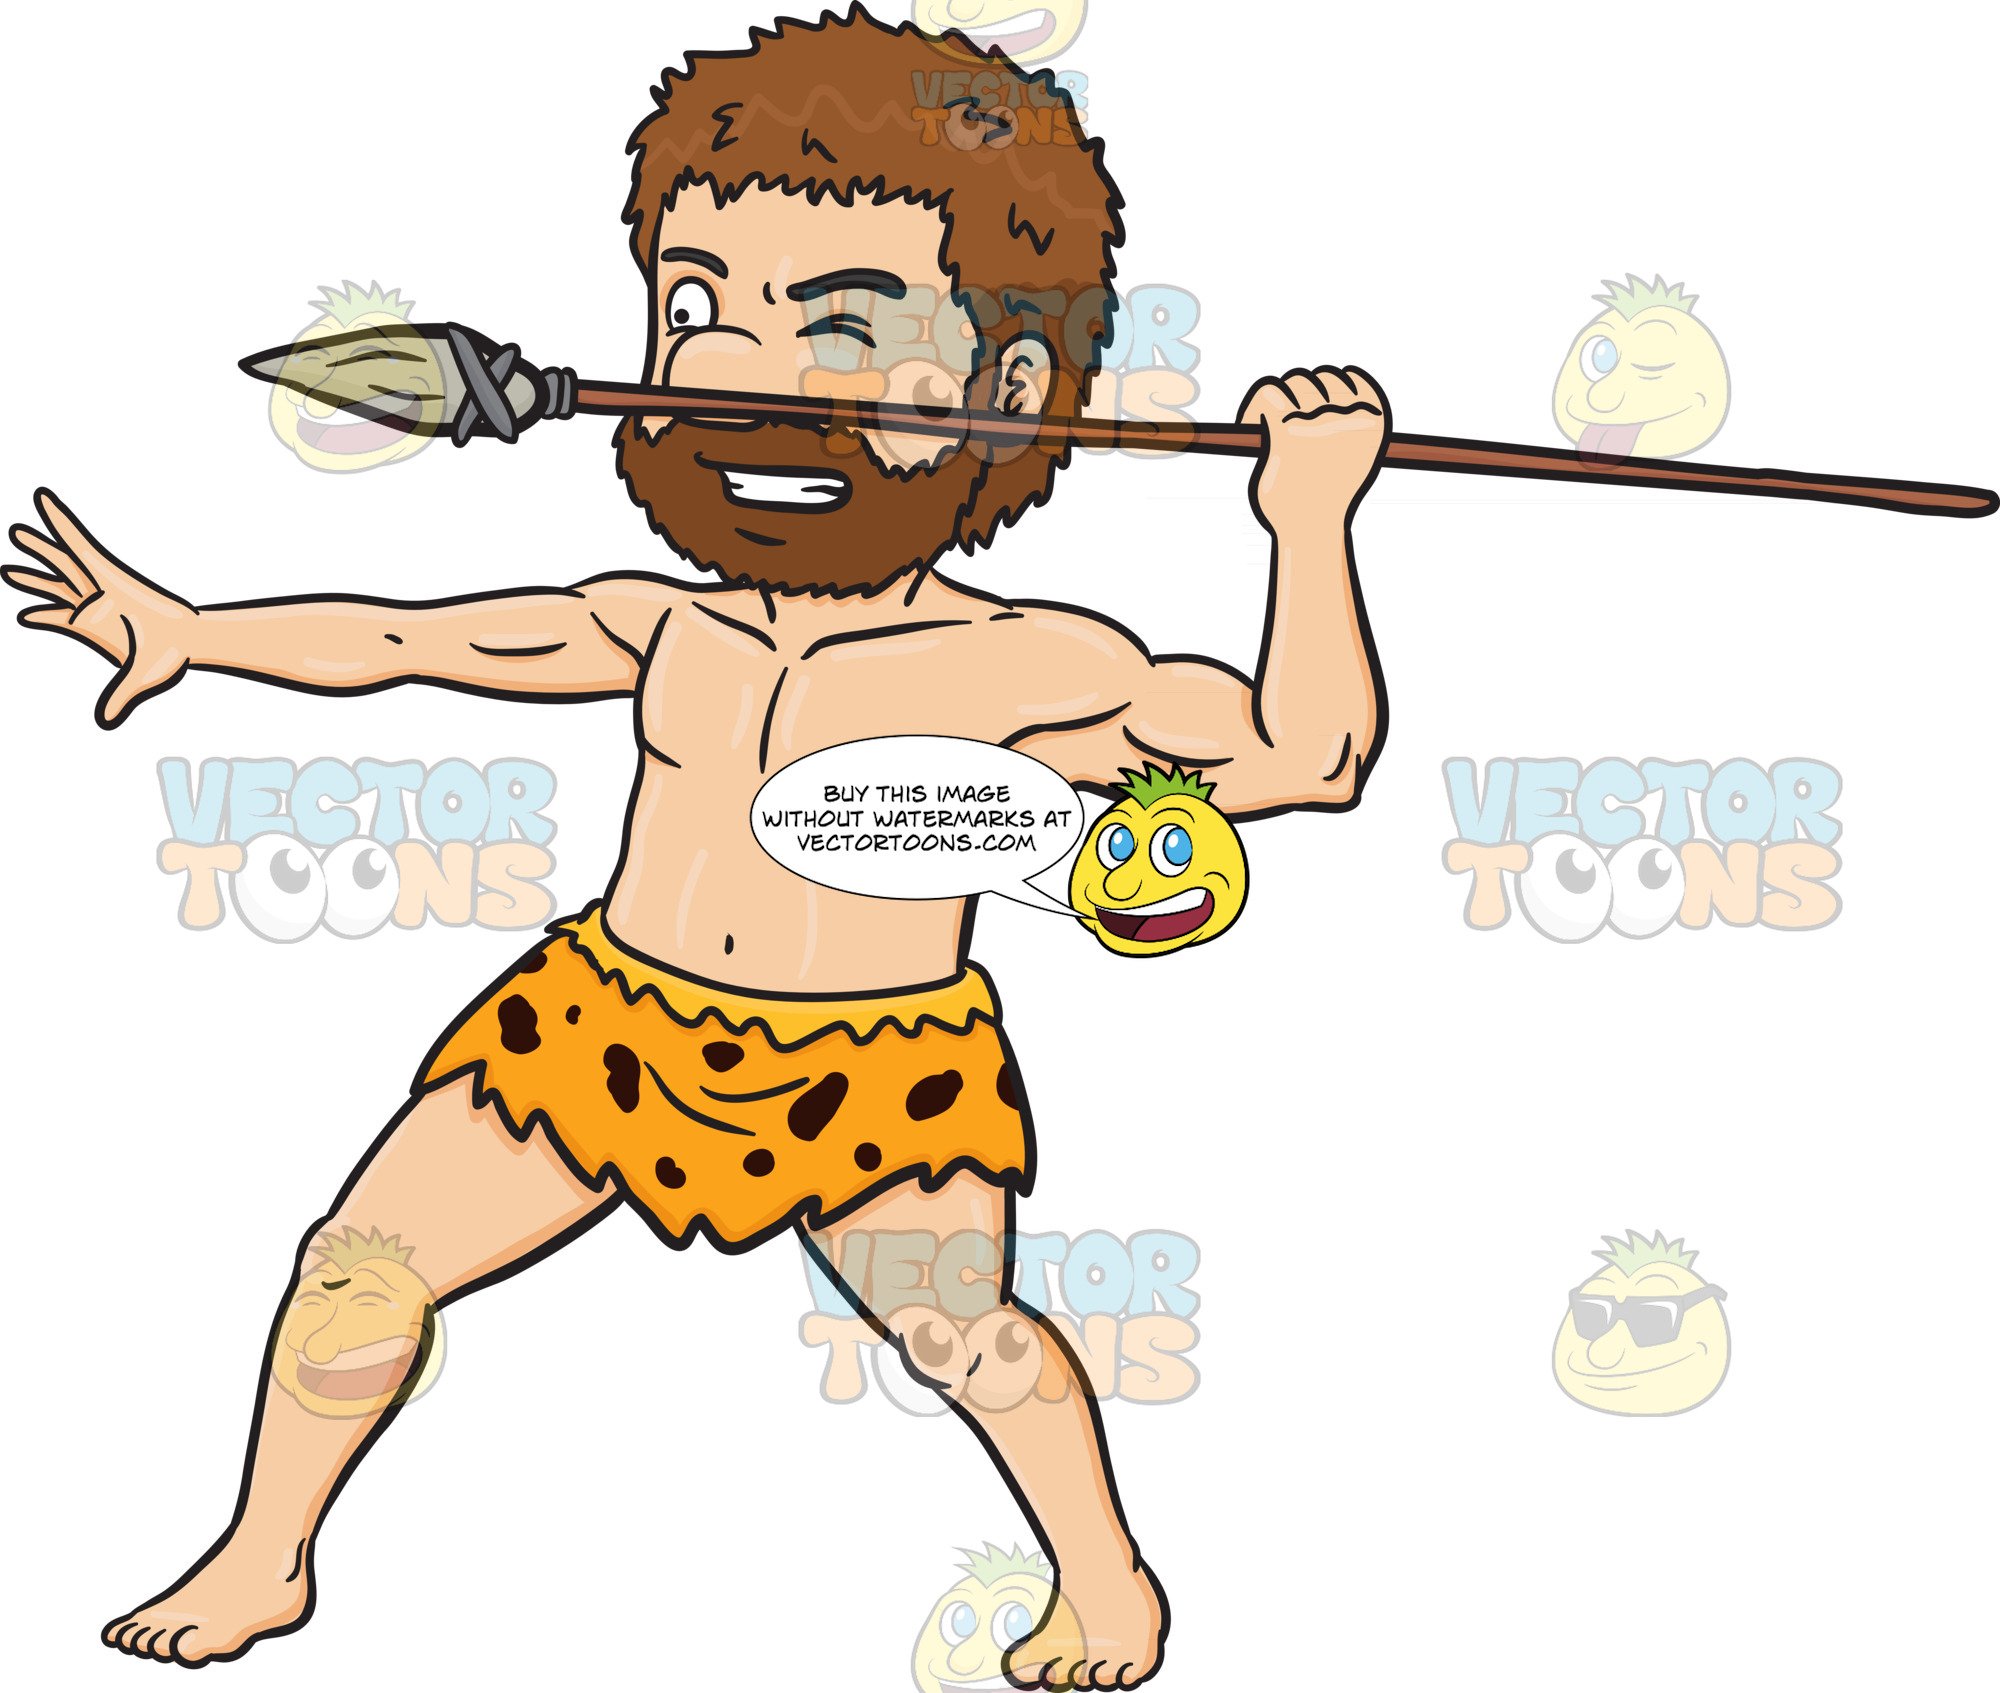 Caveman clipart spear, Caveman spear Transparent FREE for